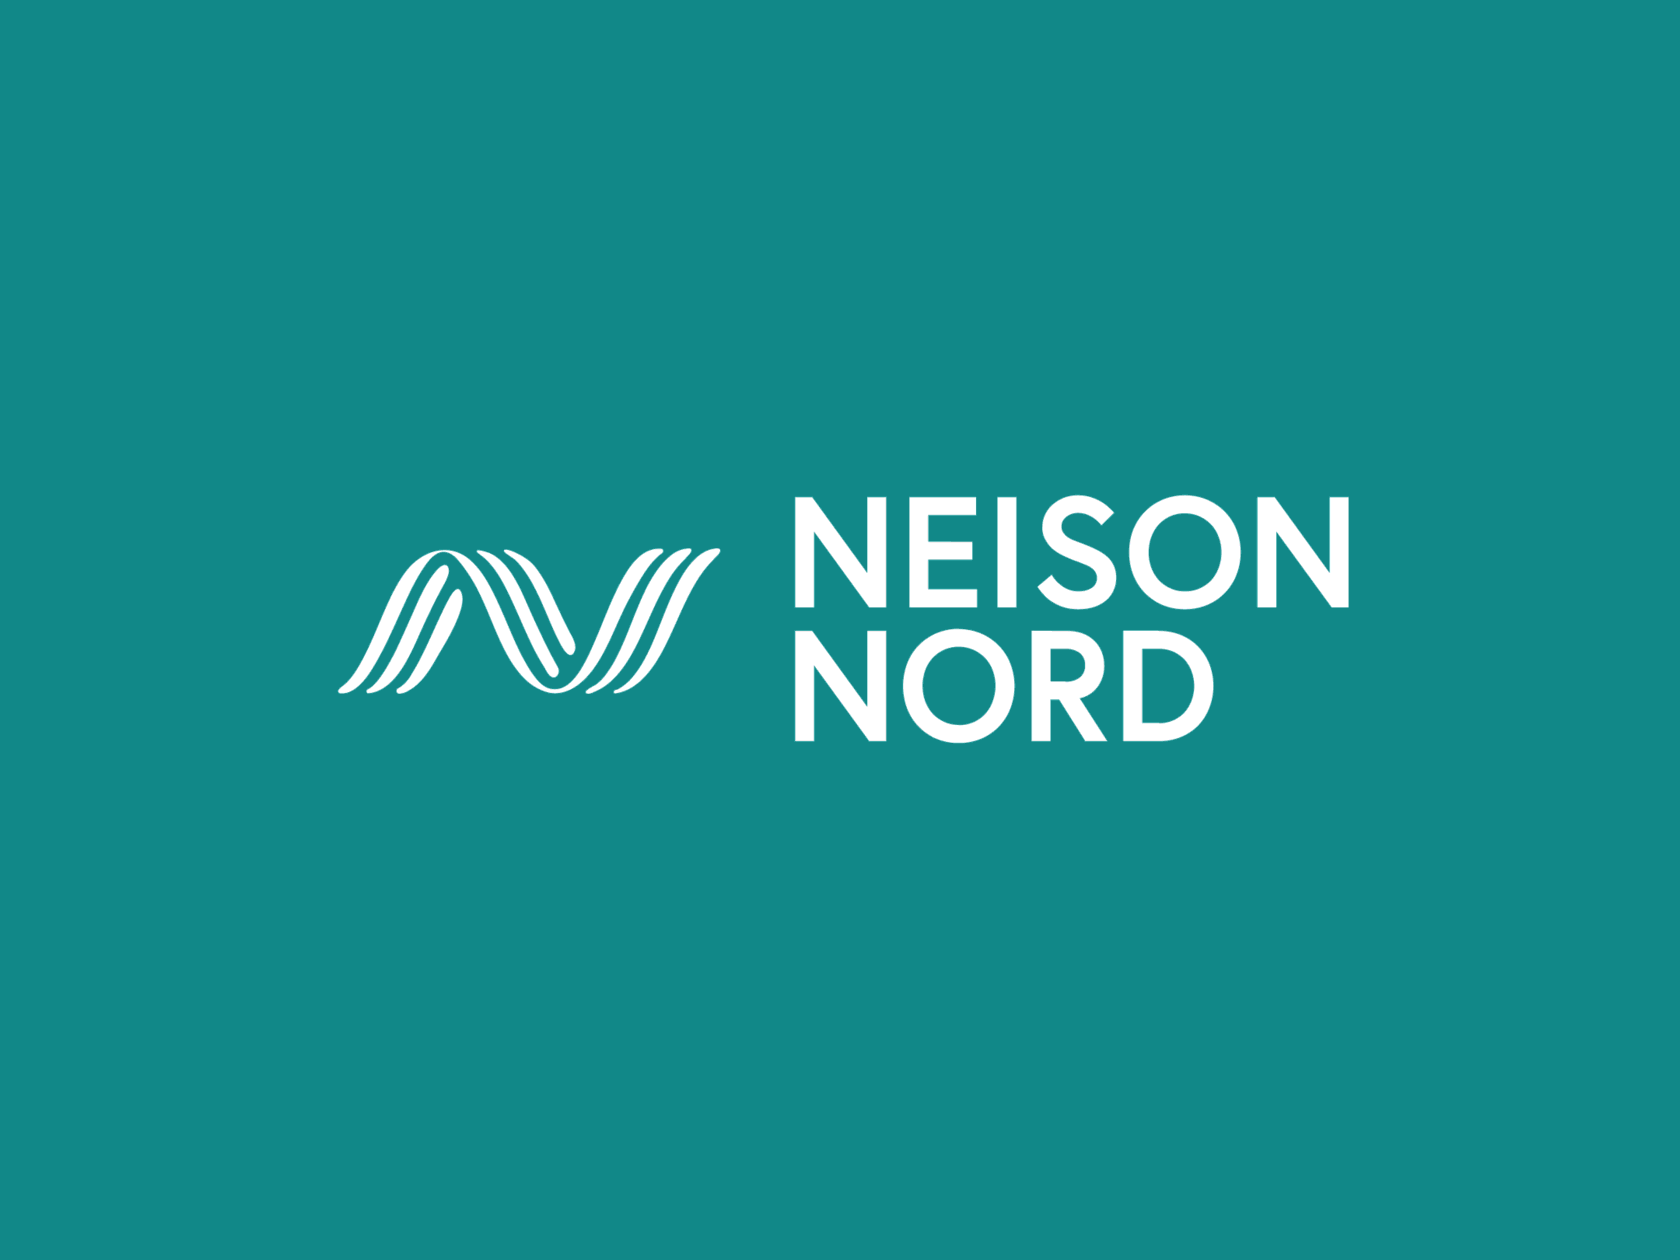 Neison Nord's final logo